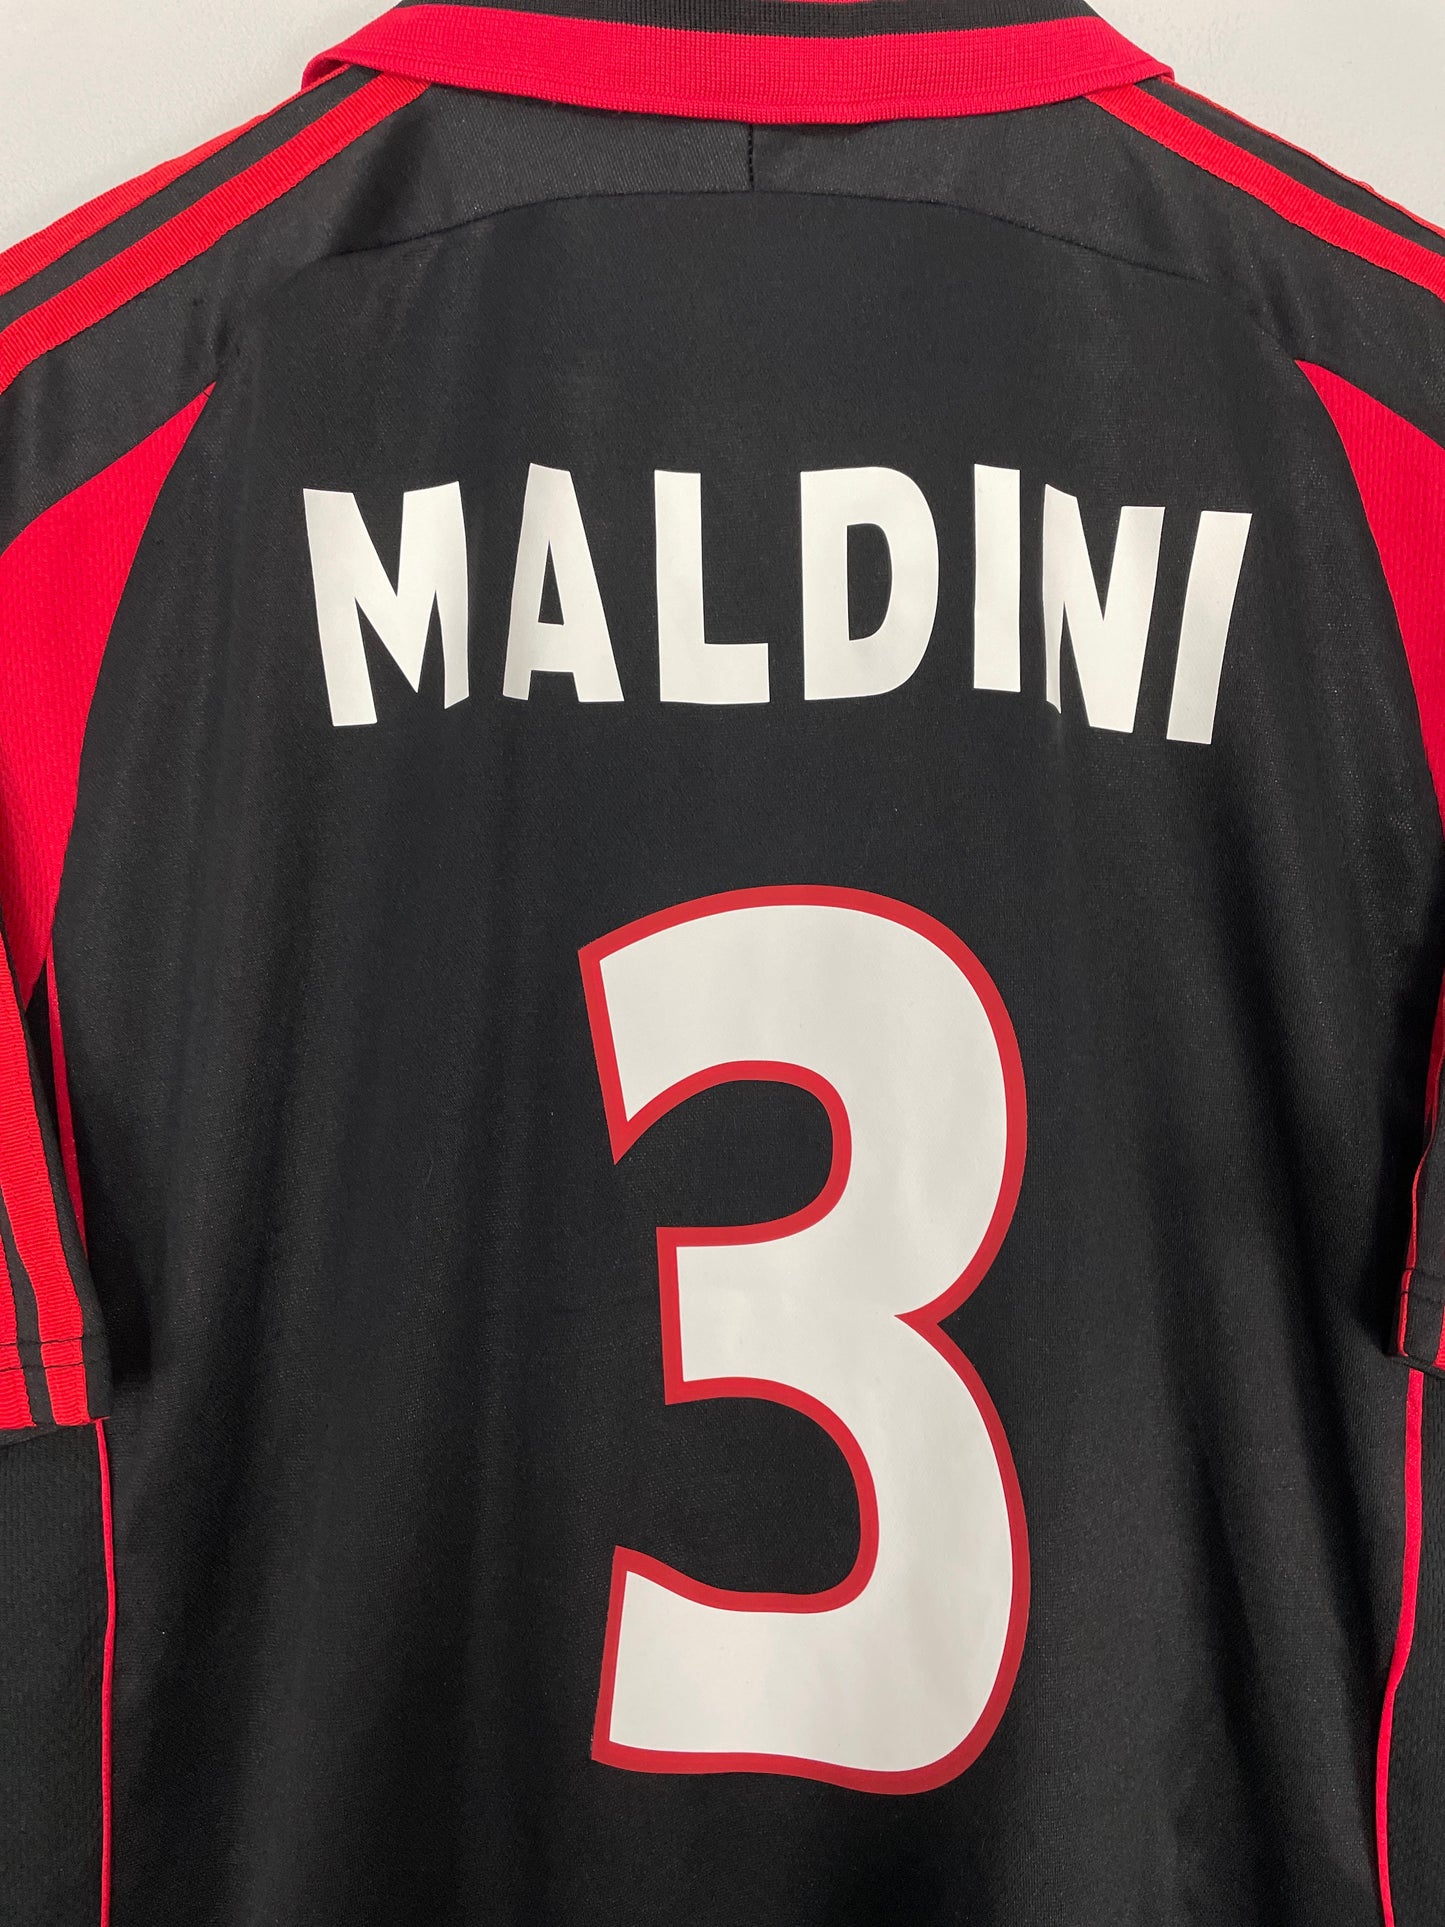 2000/01 AC MILAN MALDINI #3 THIRD SHIRT (M) ADIDAS